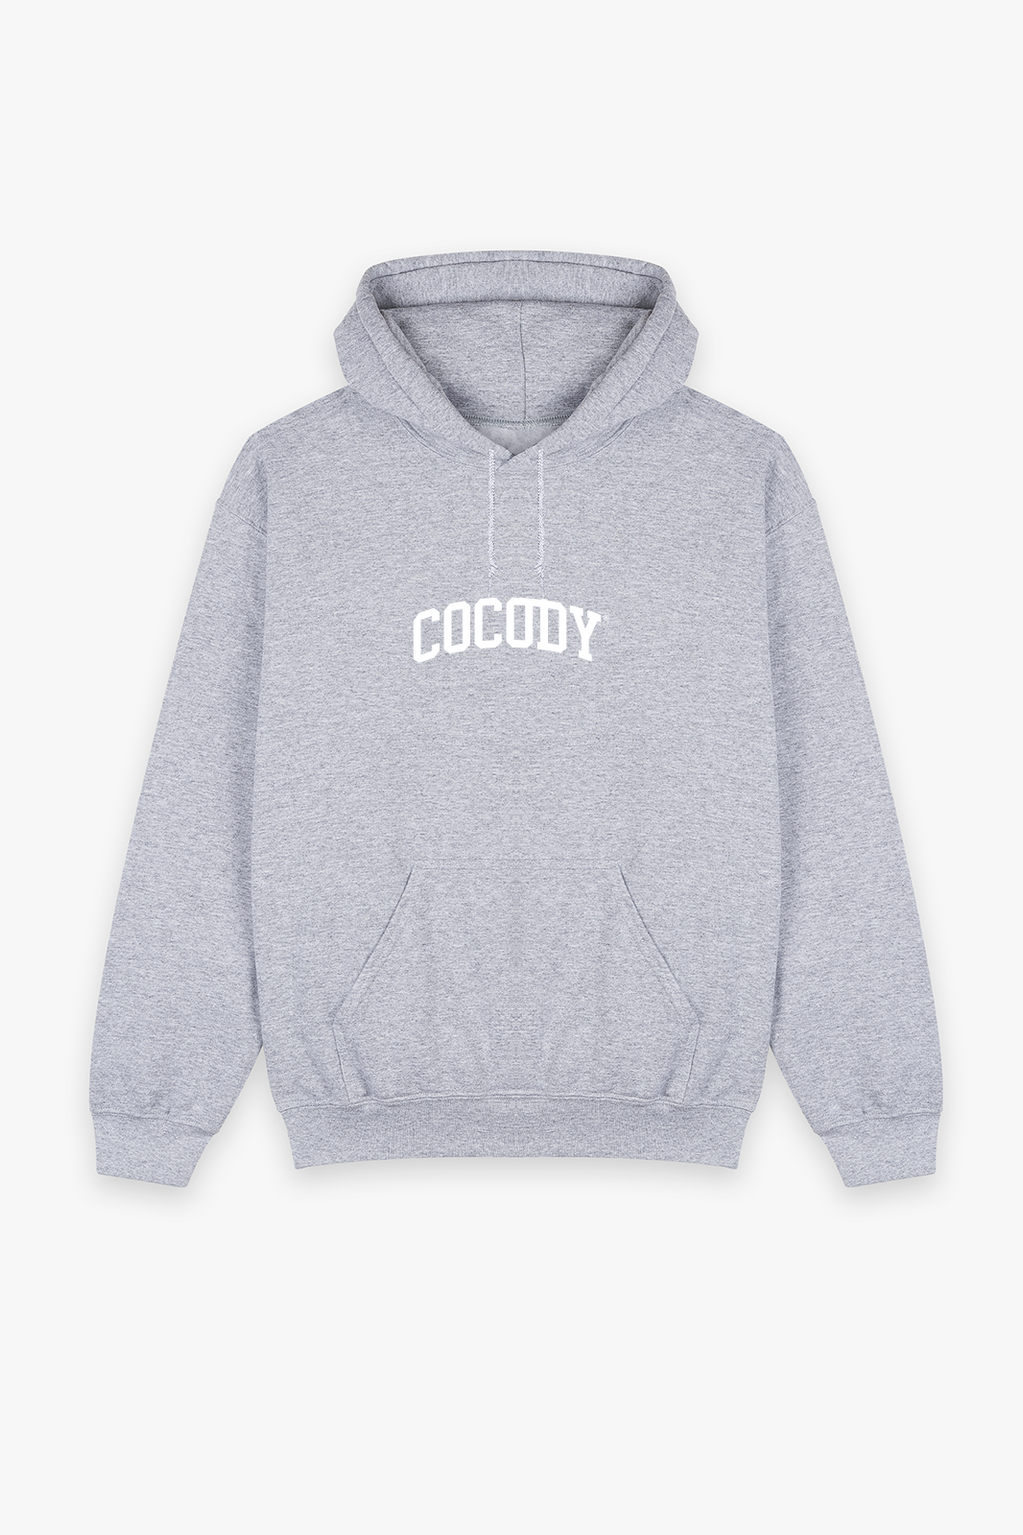 Cocody Hoodie Grey